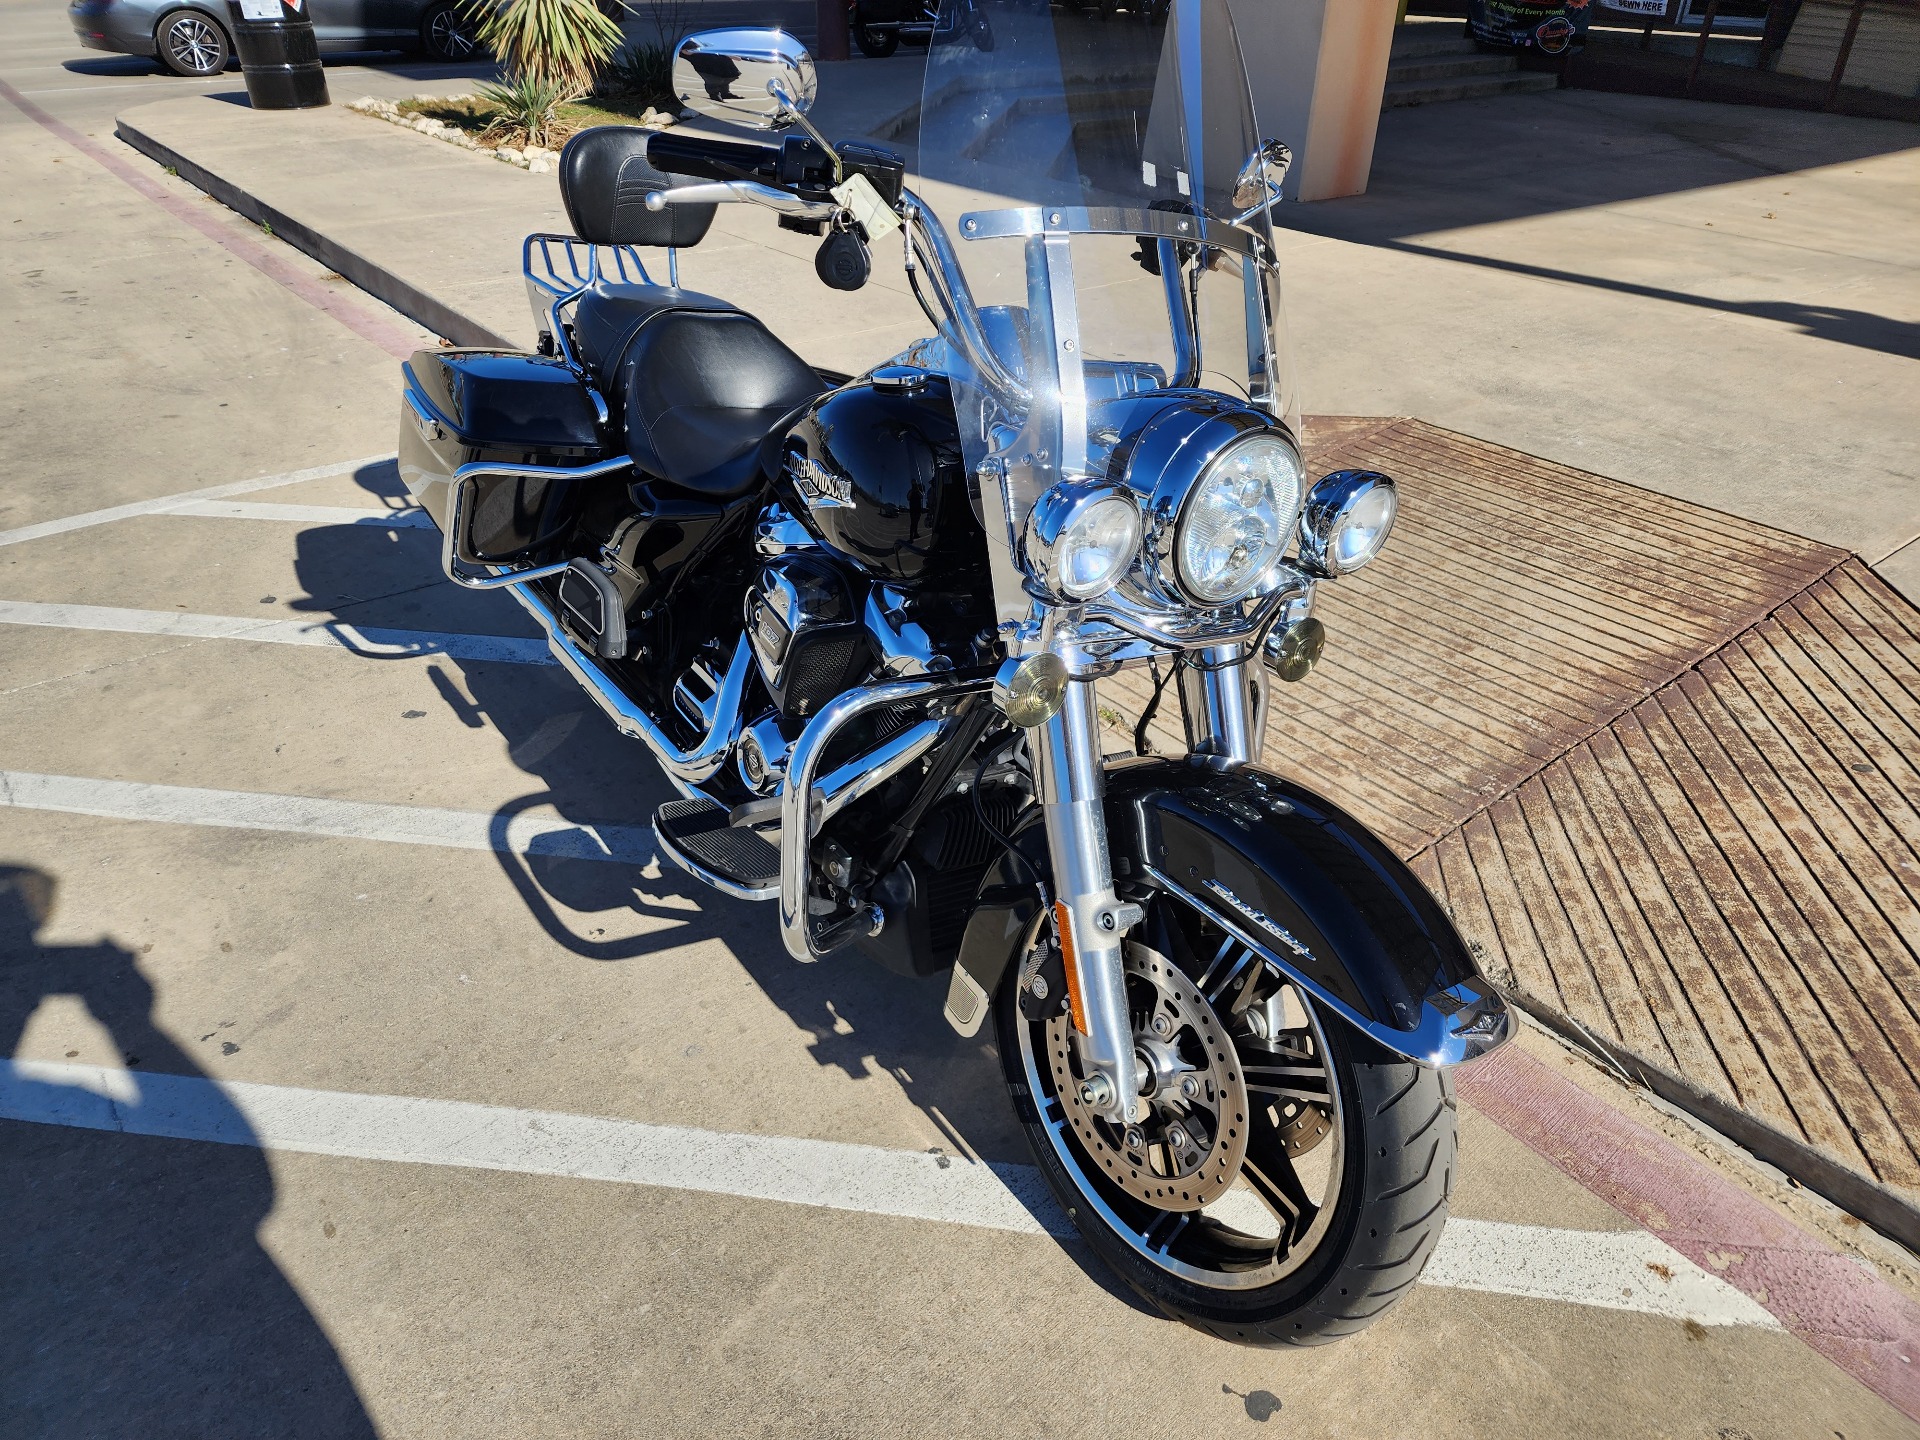 2020 Harley-Davidson Road King® in San Antonio, Texas - Photo 2